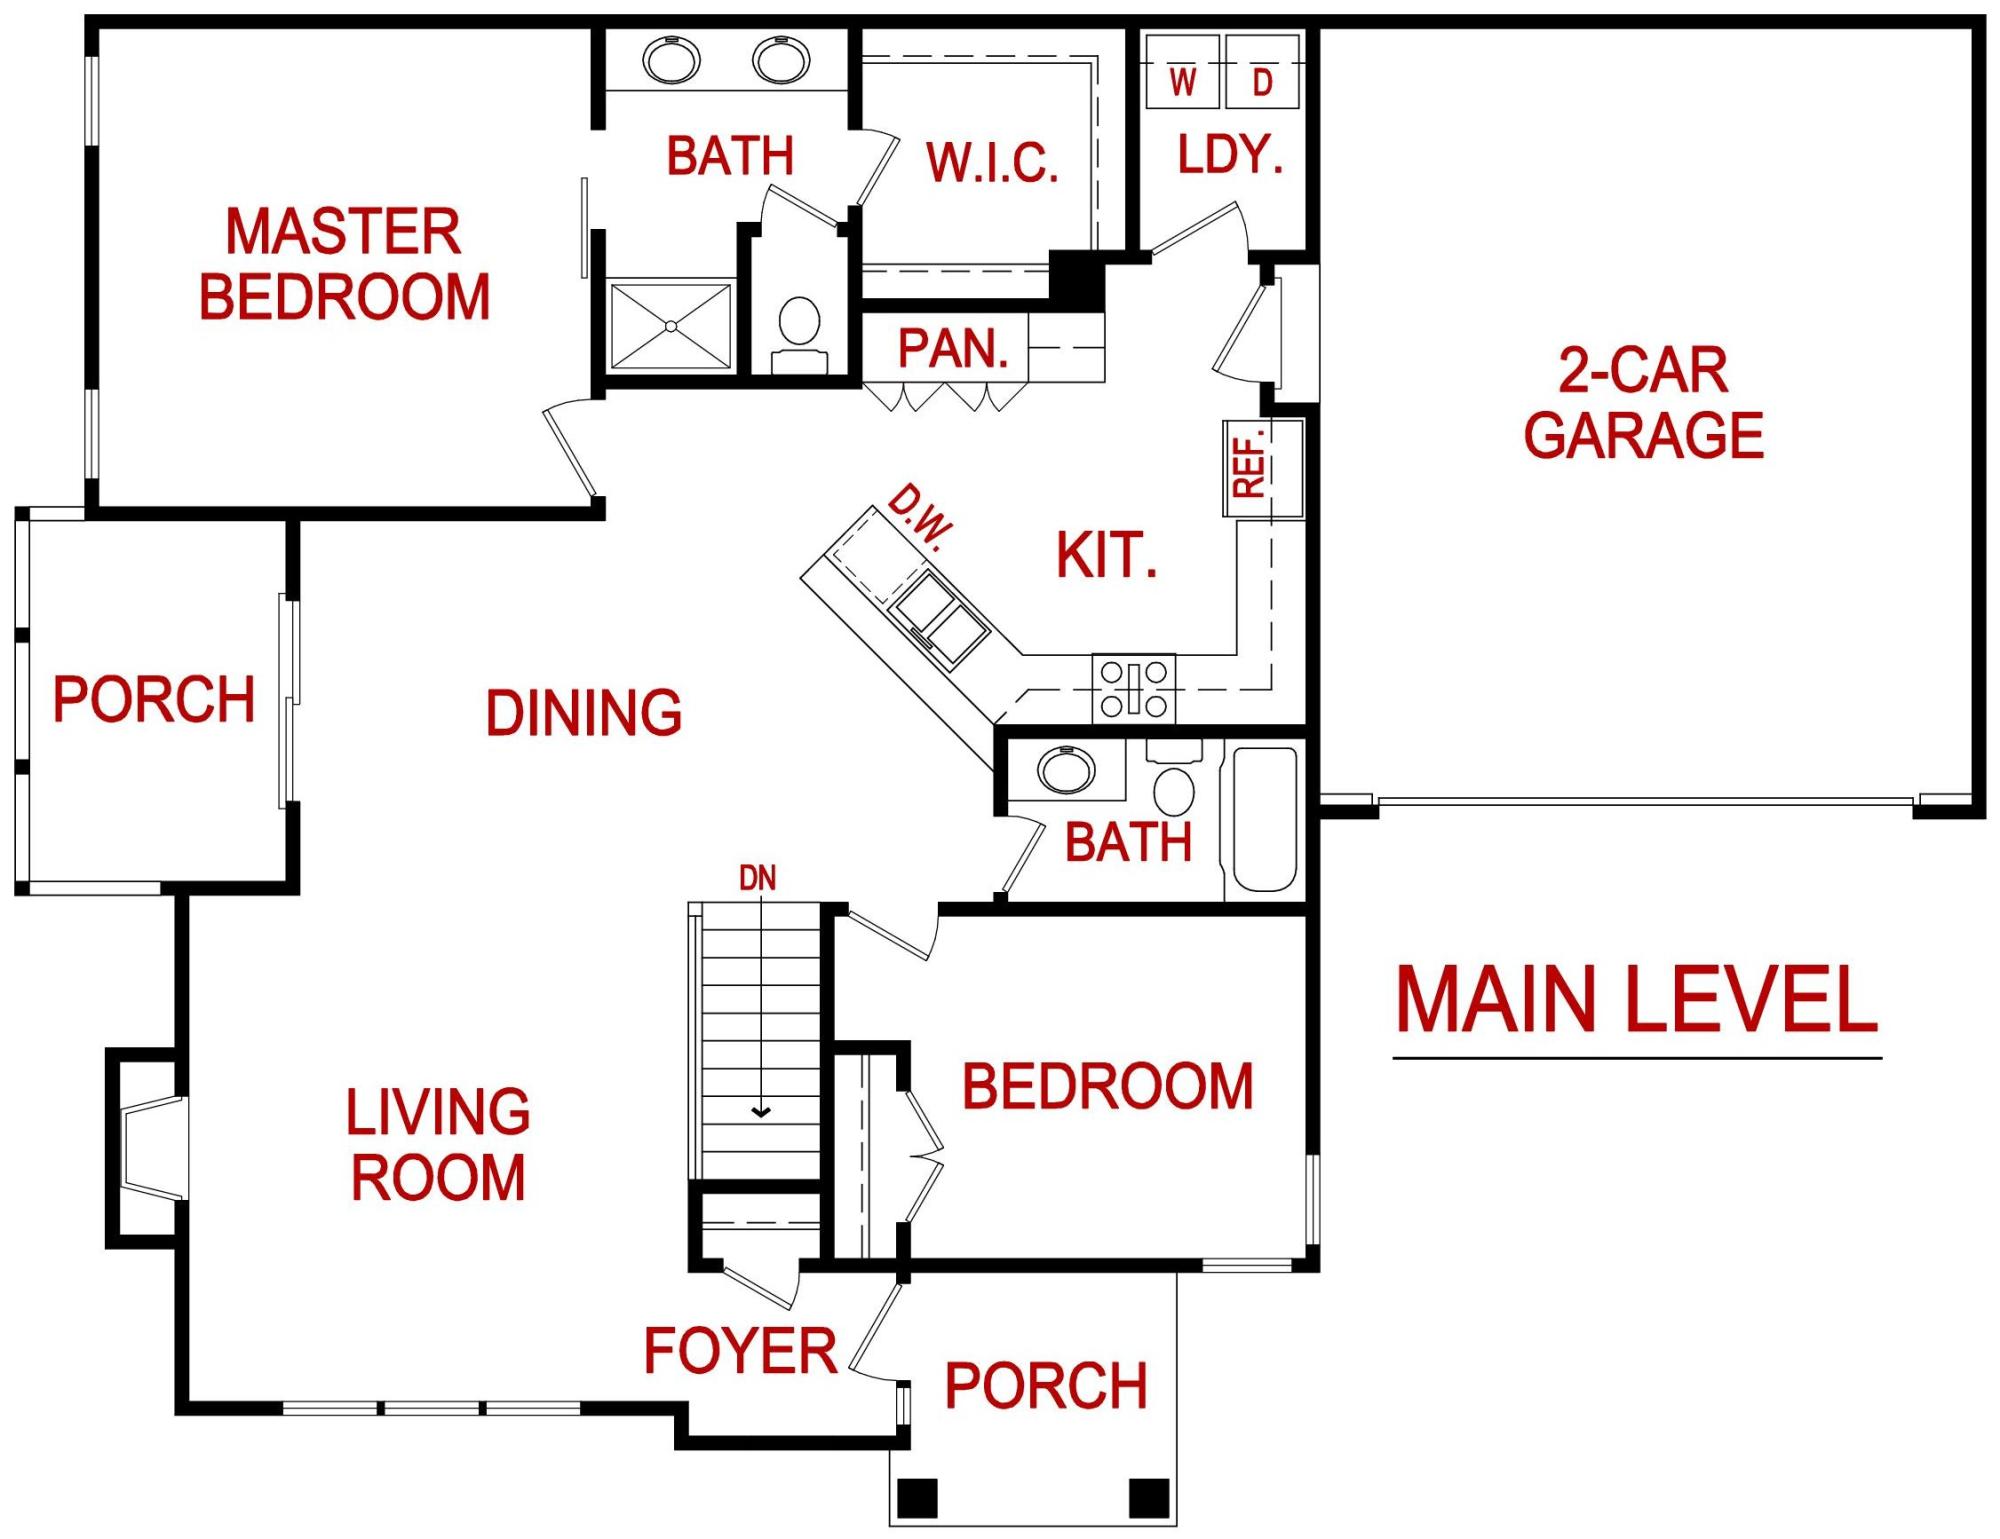 main level floor plan for the minor model from Lambie custom homes